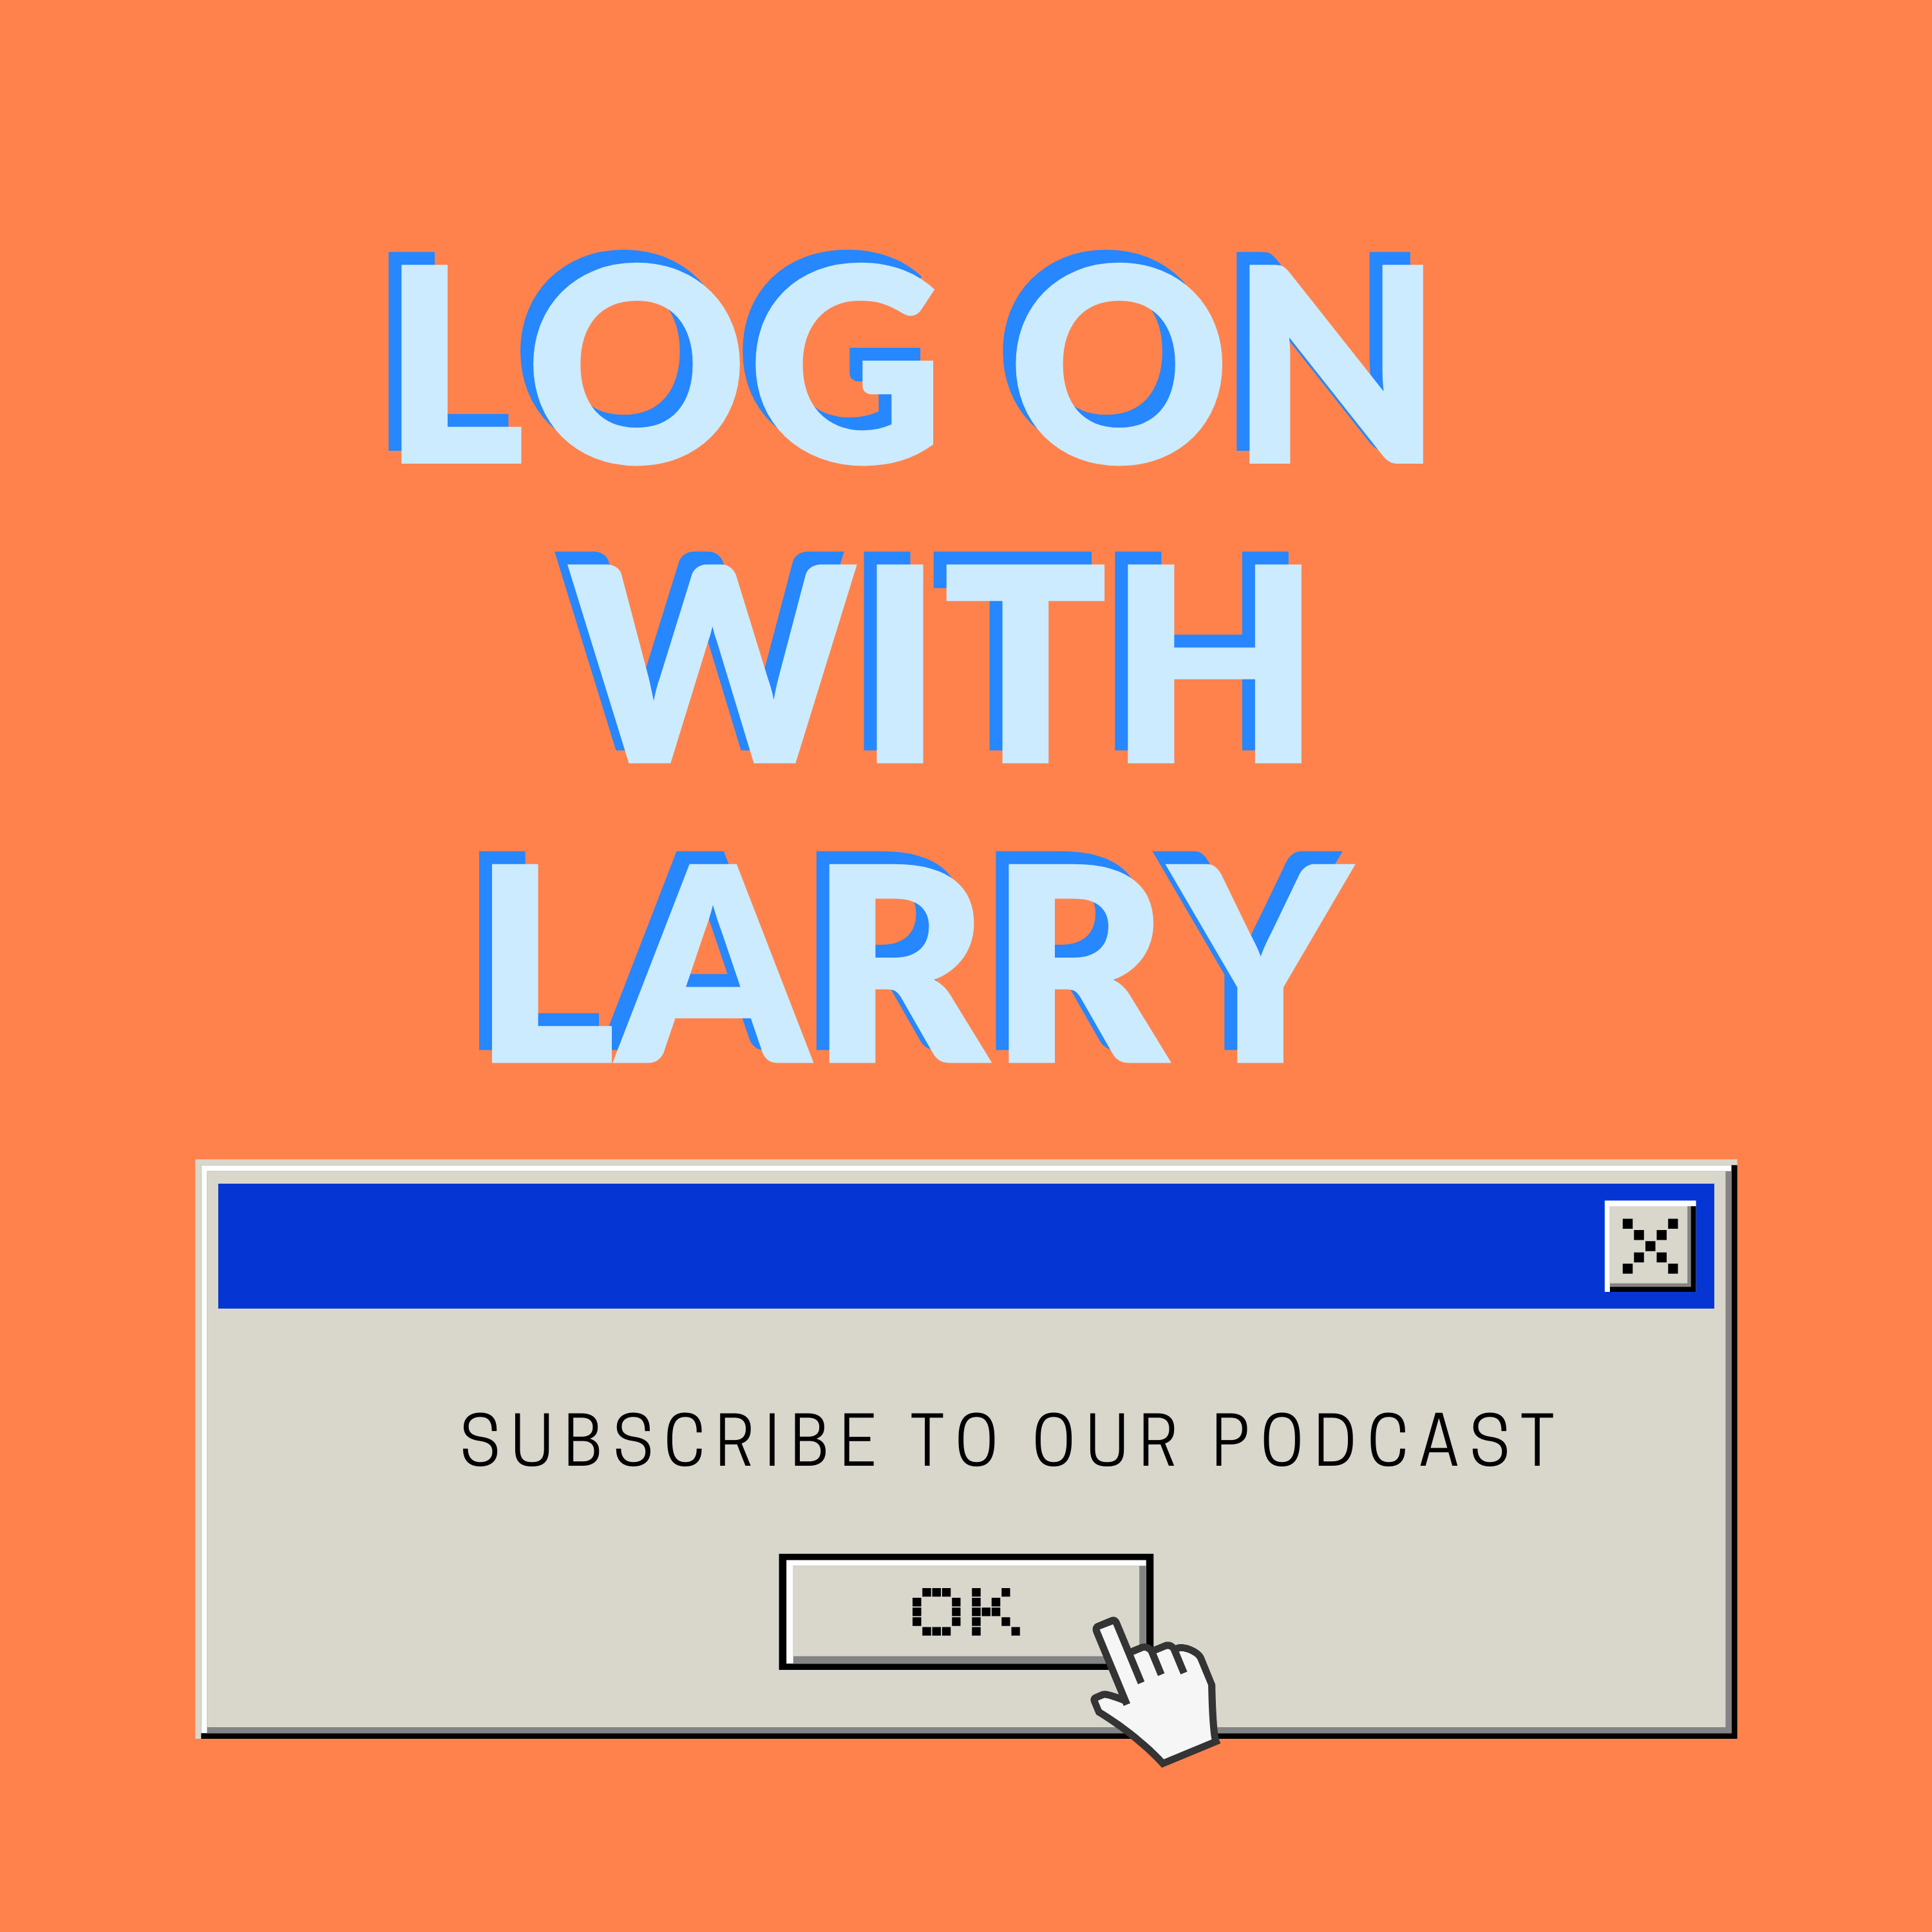 Podcast - New